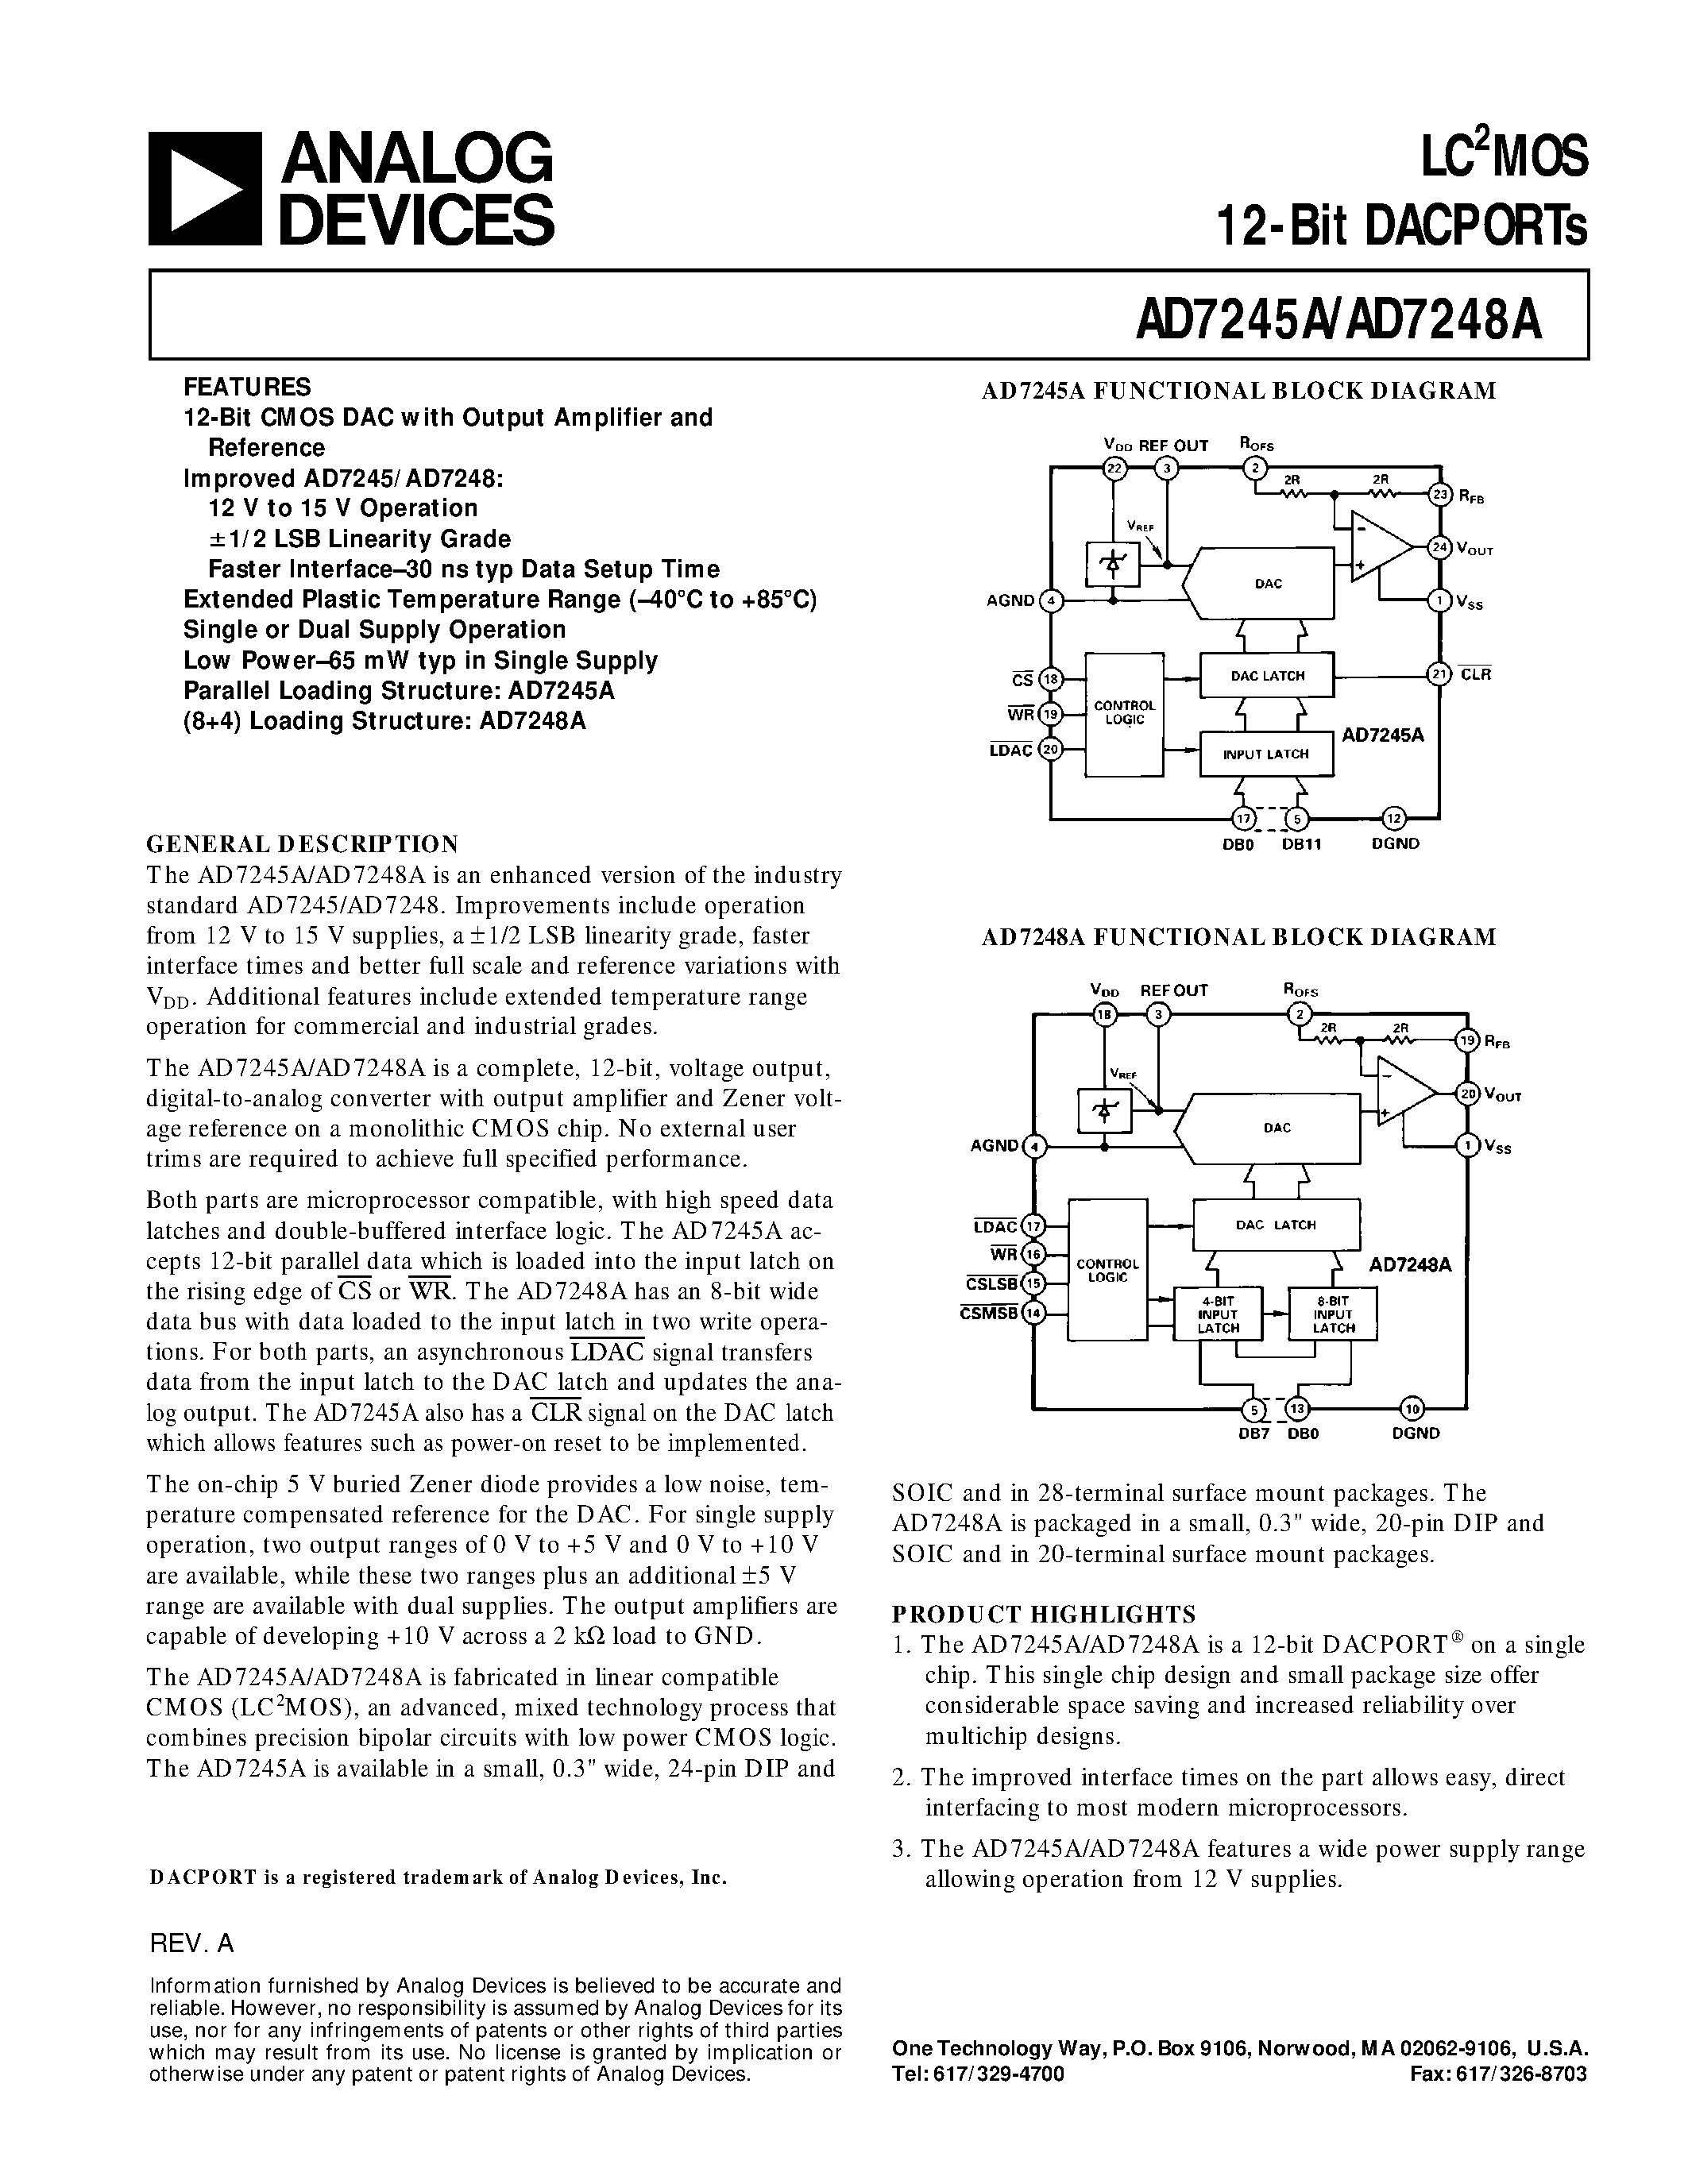 Datasheet AD7248ABR - LC2MOS 12-Bit DACPORTs page 1